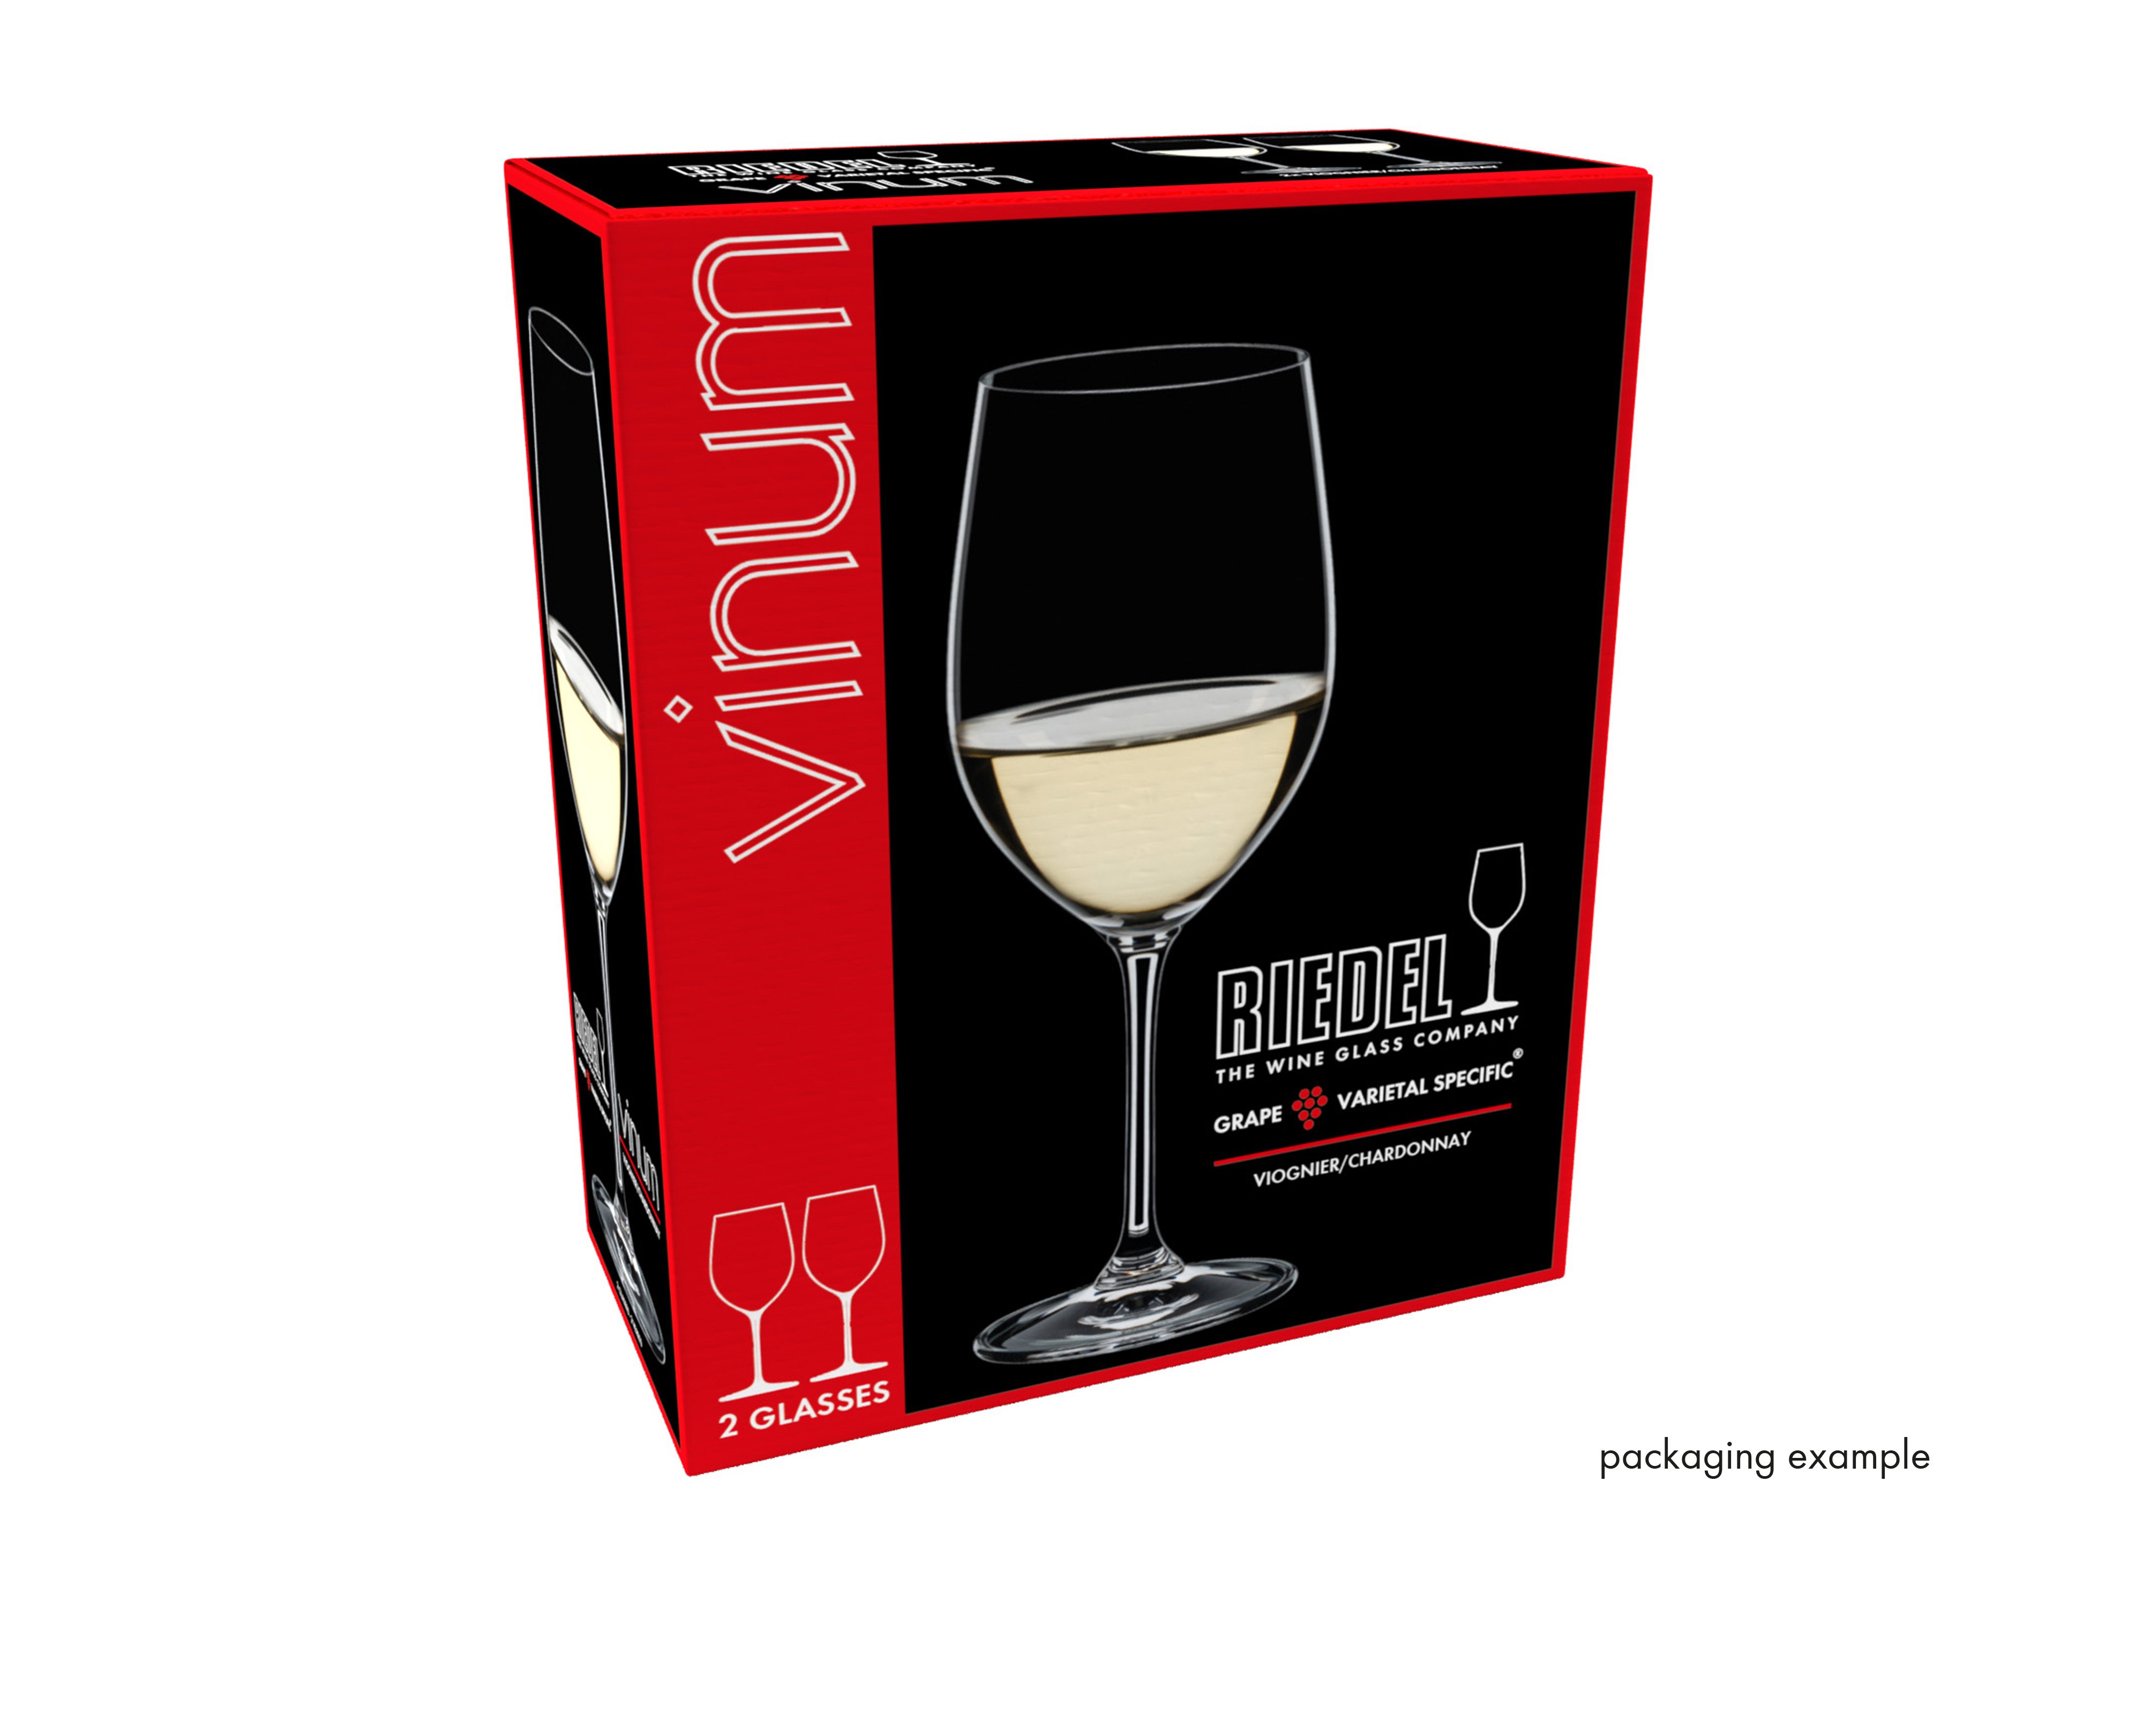 Viognier/Chardonnay) Riedel Superleggero Viognier/Chardonnay Glass, Clea 